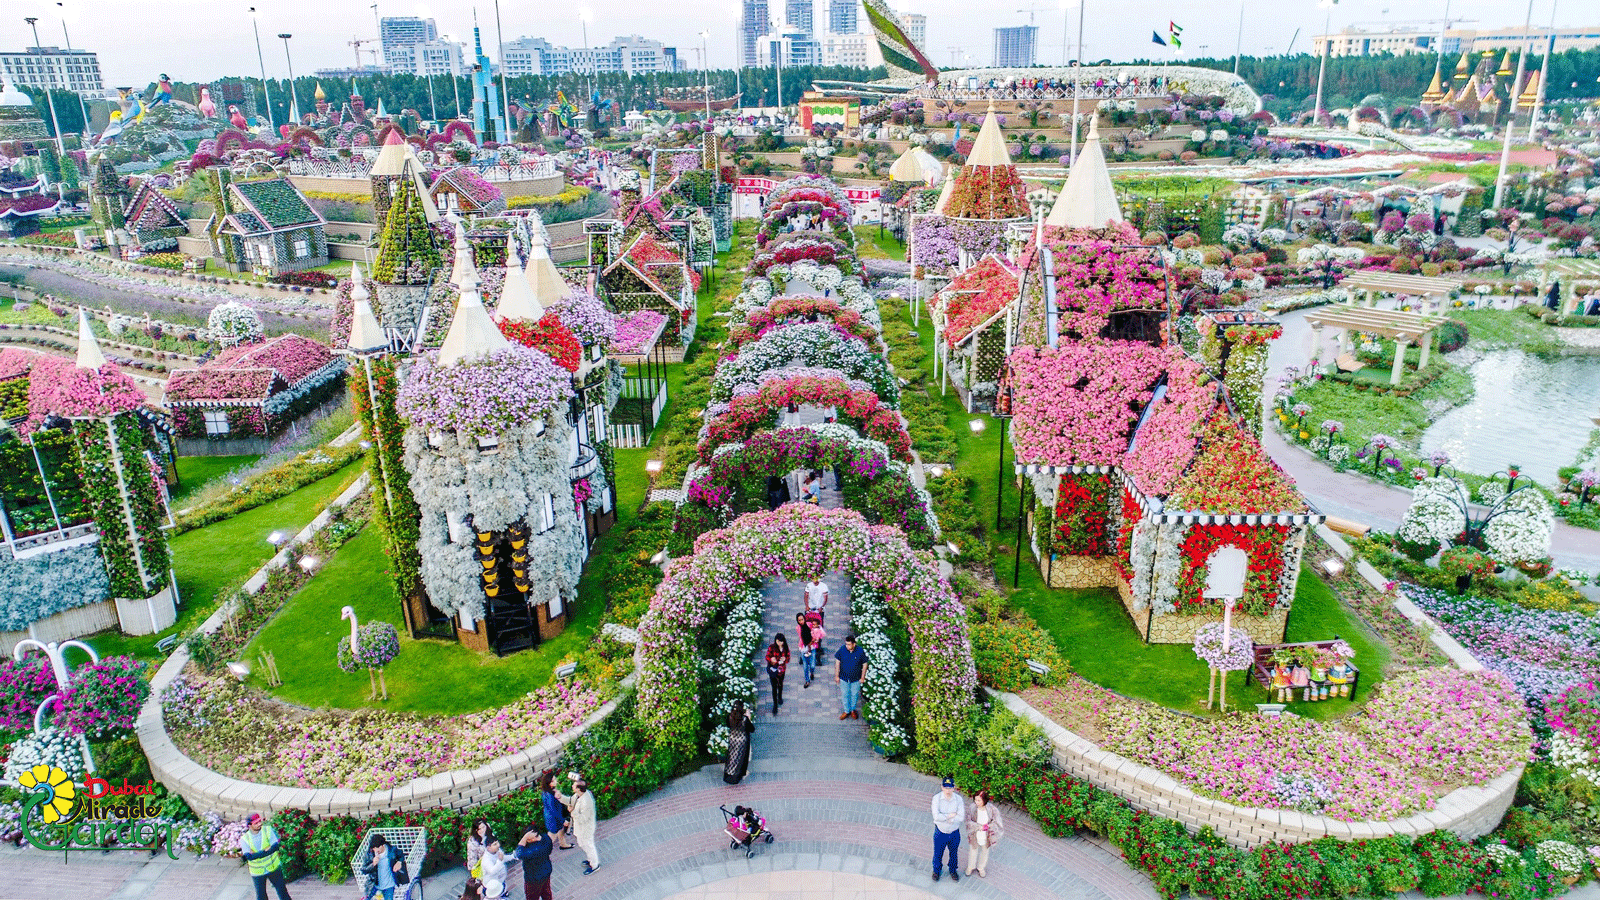 dubai miracle garden: world's largest flower garden | cnn travel